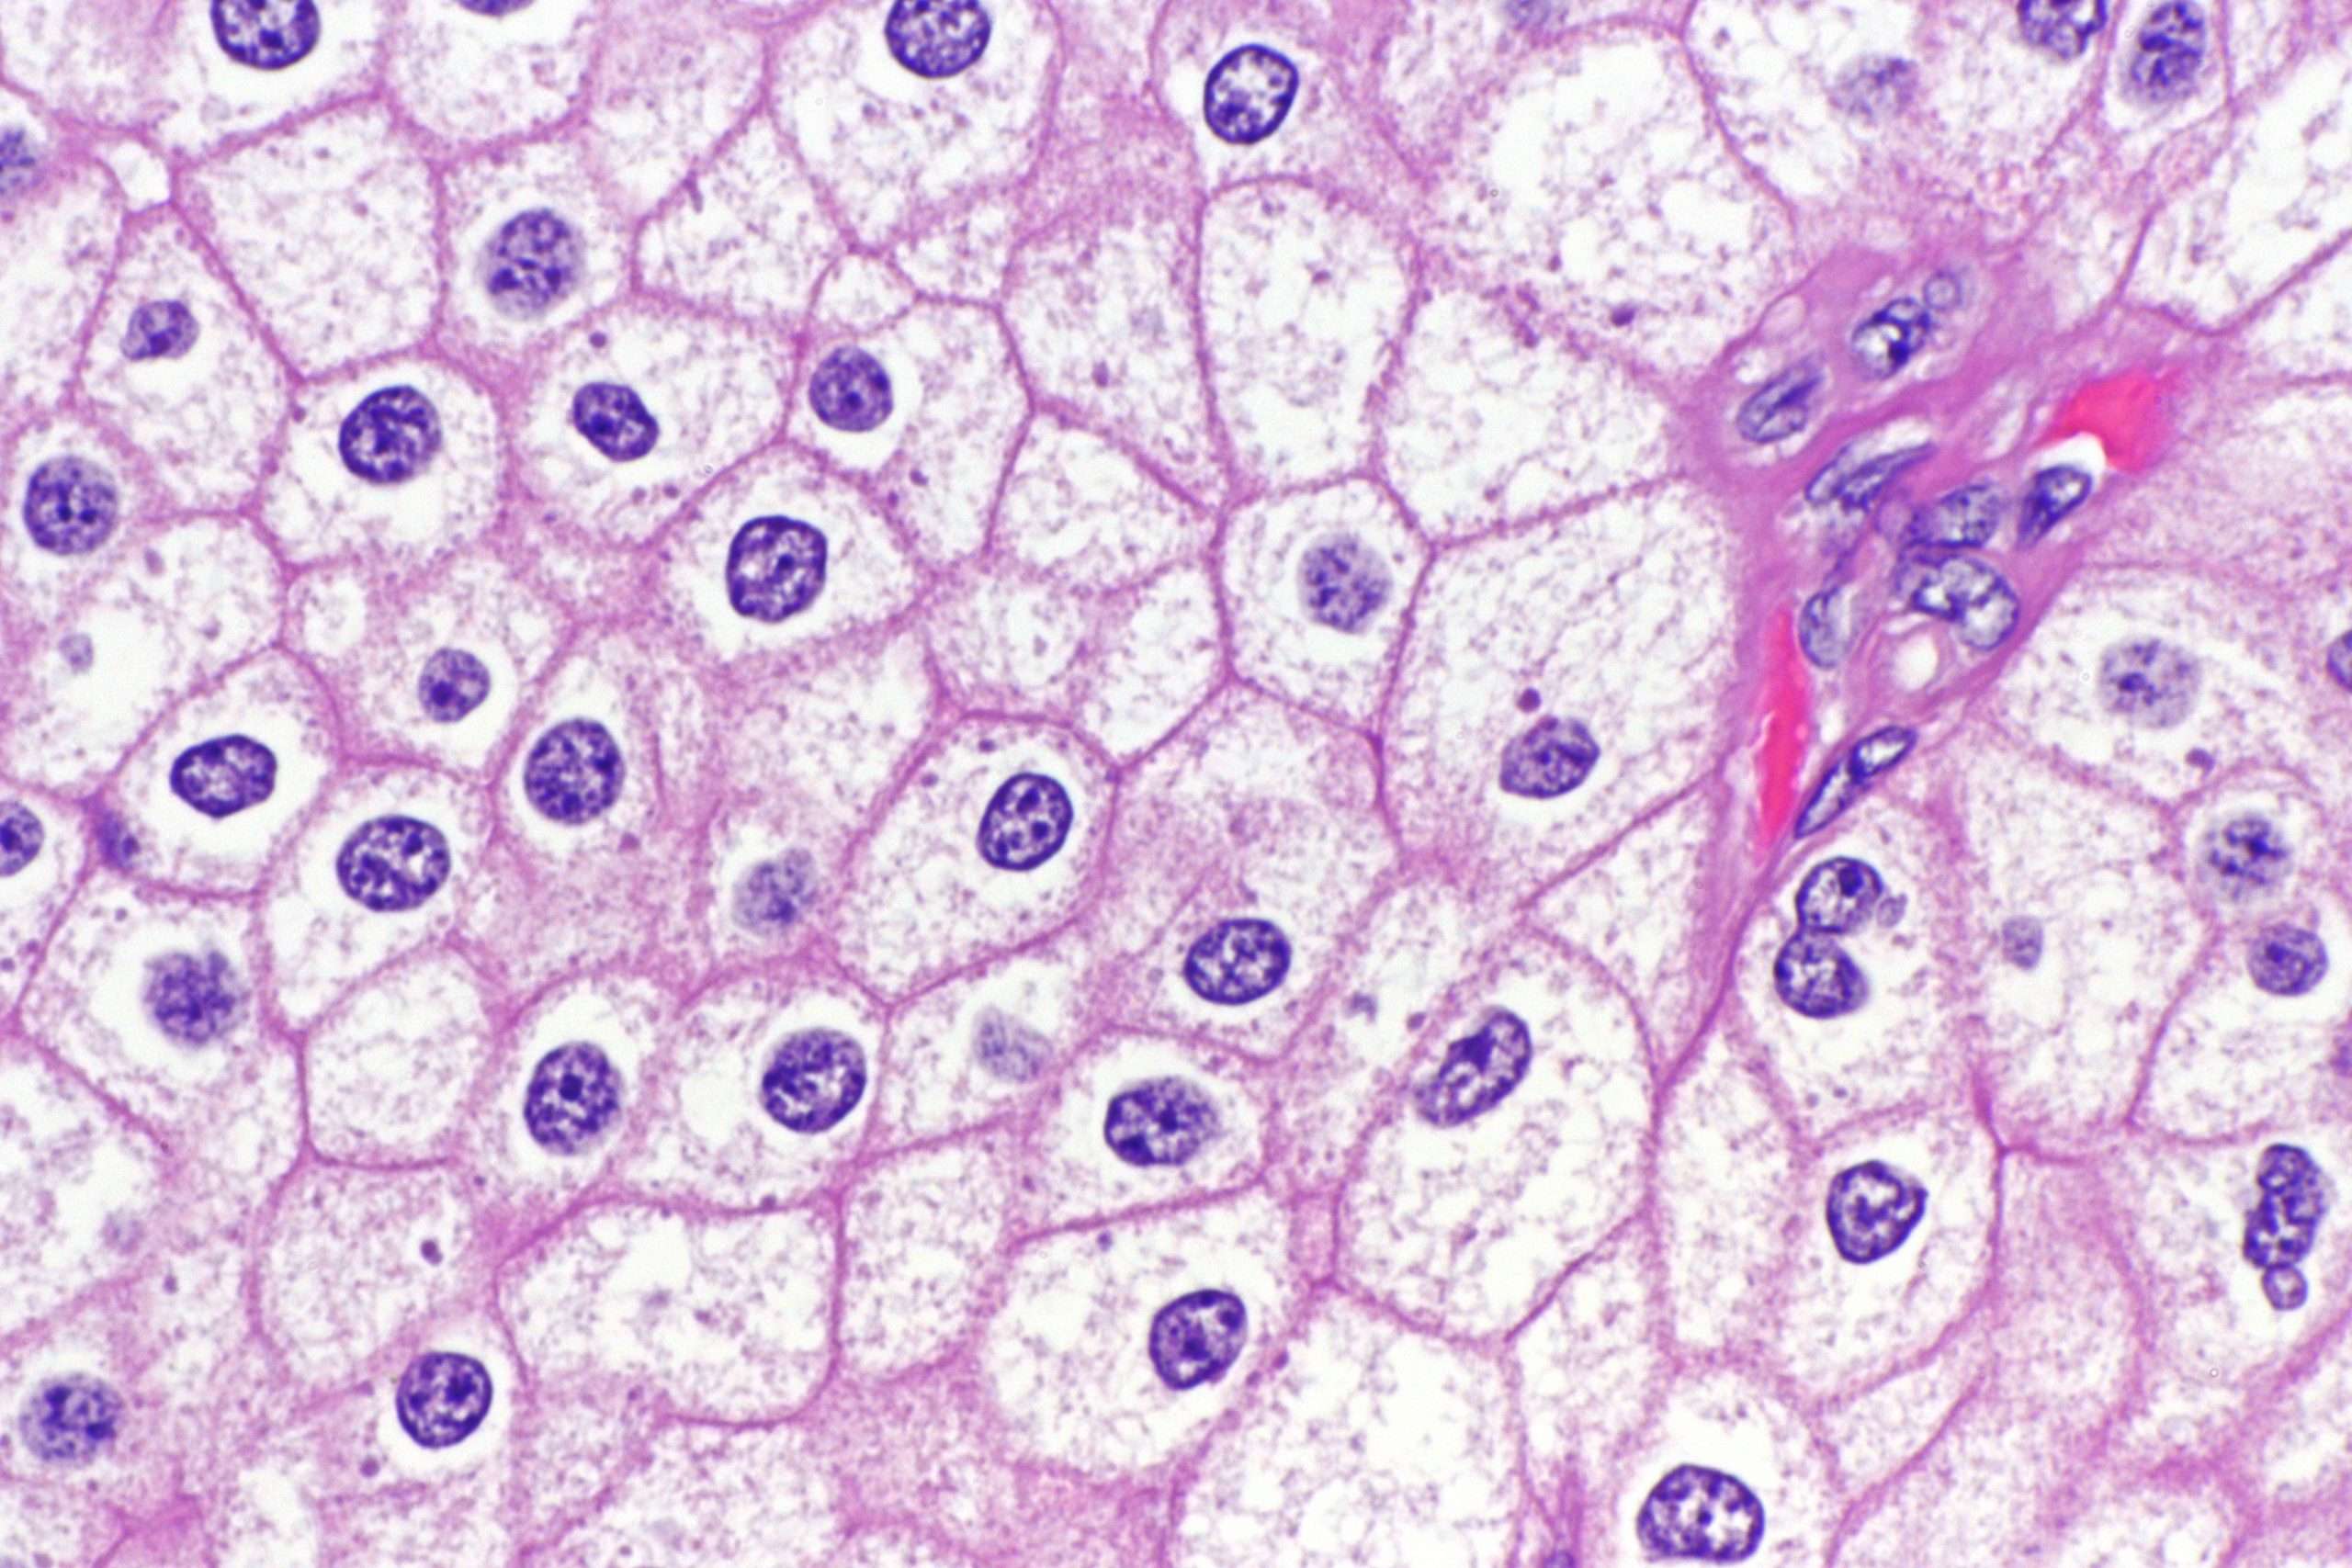 File:Chromophobe renal cell carcinoma